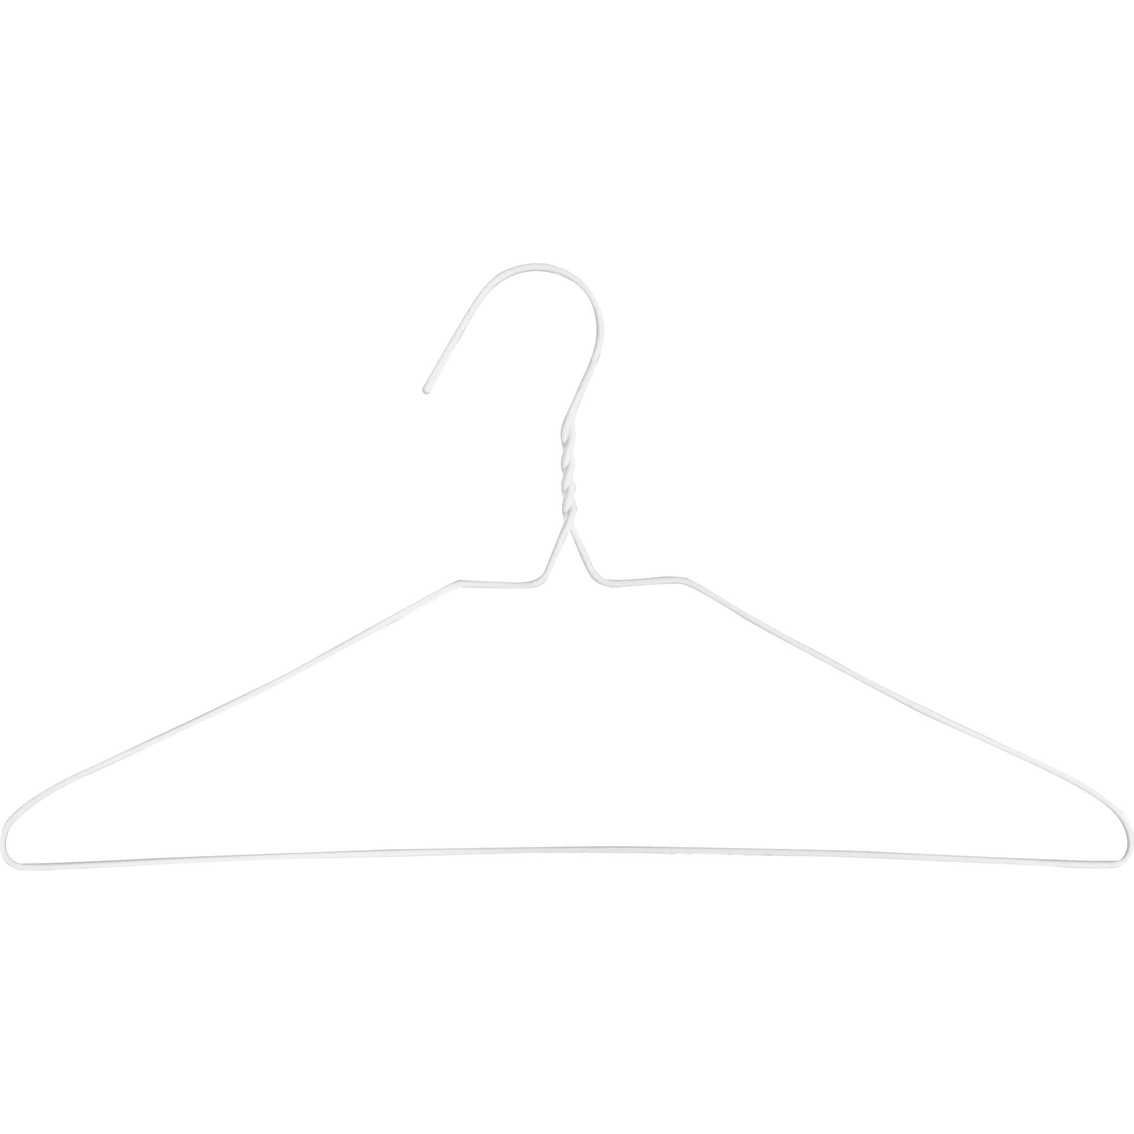 Merrick Drip Dry Hangers 10 Pk. - Image 2 of 3